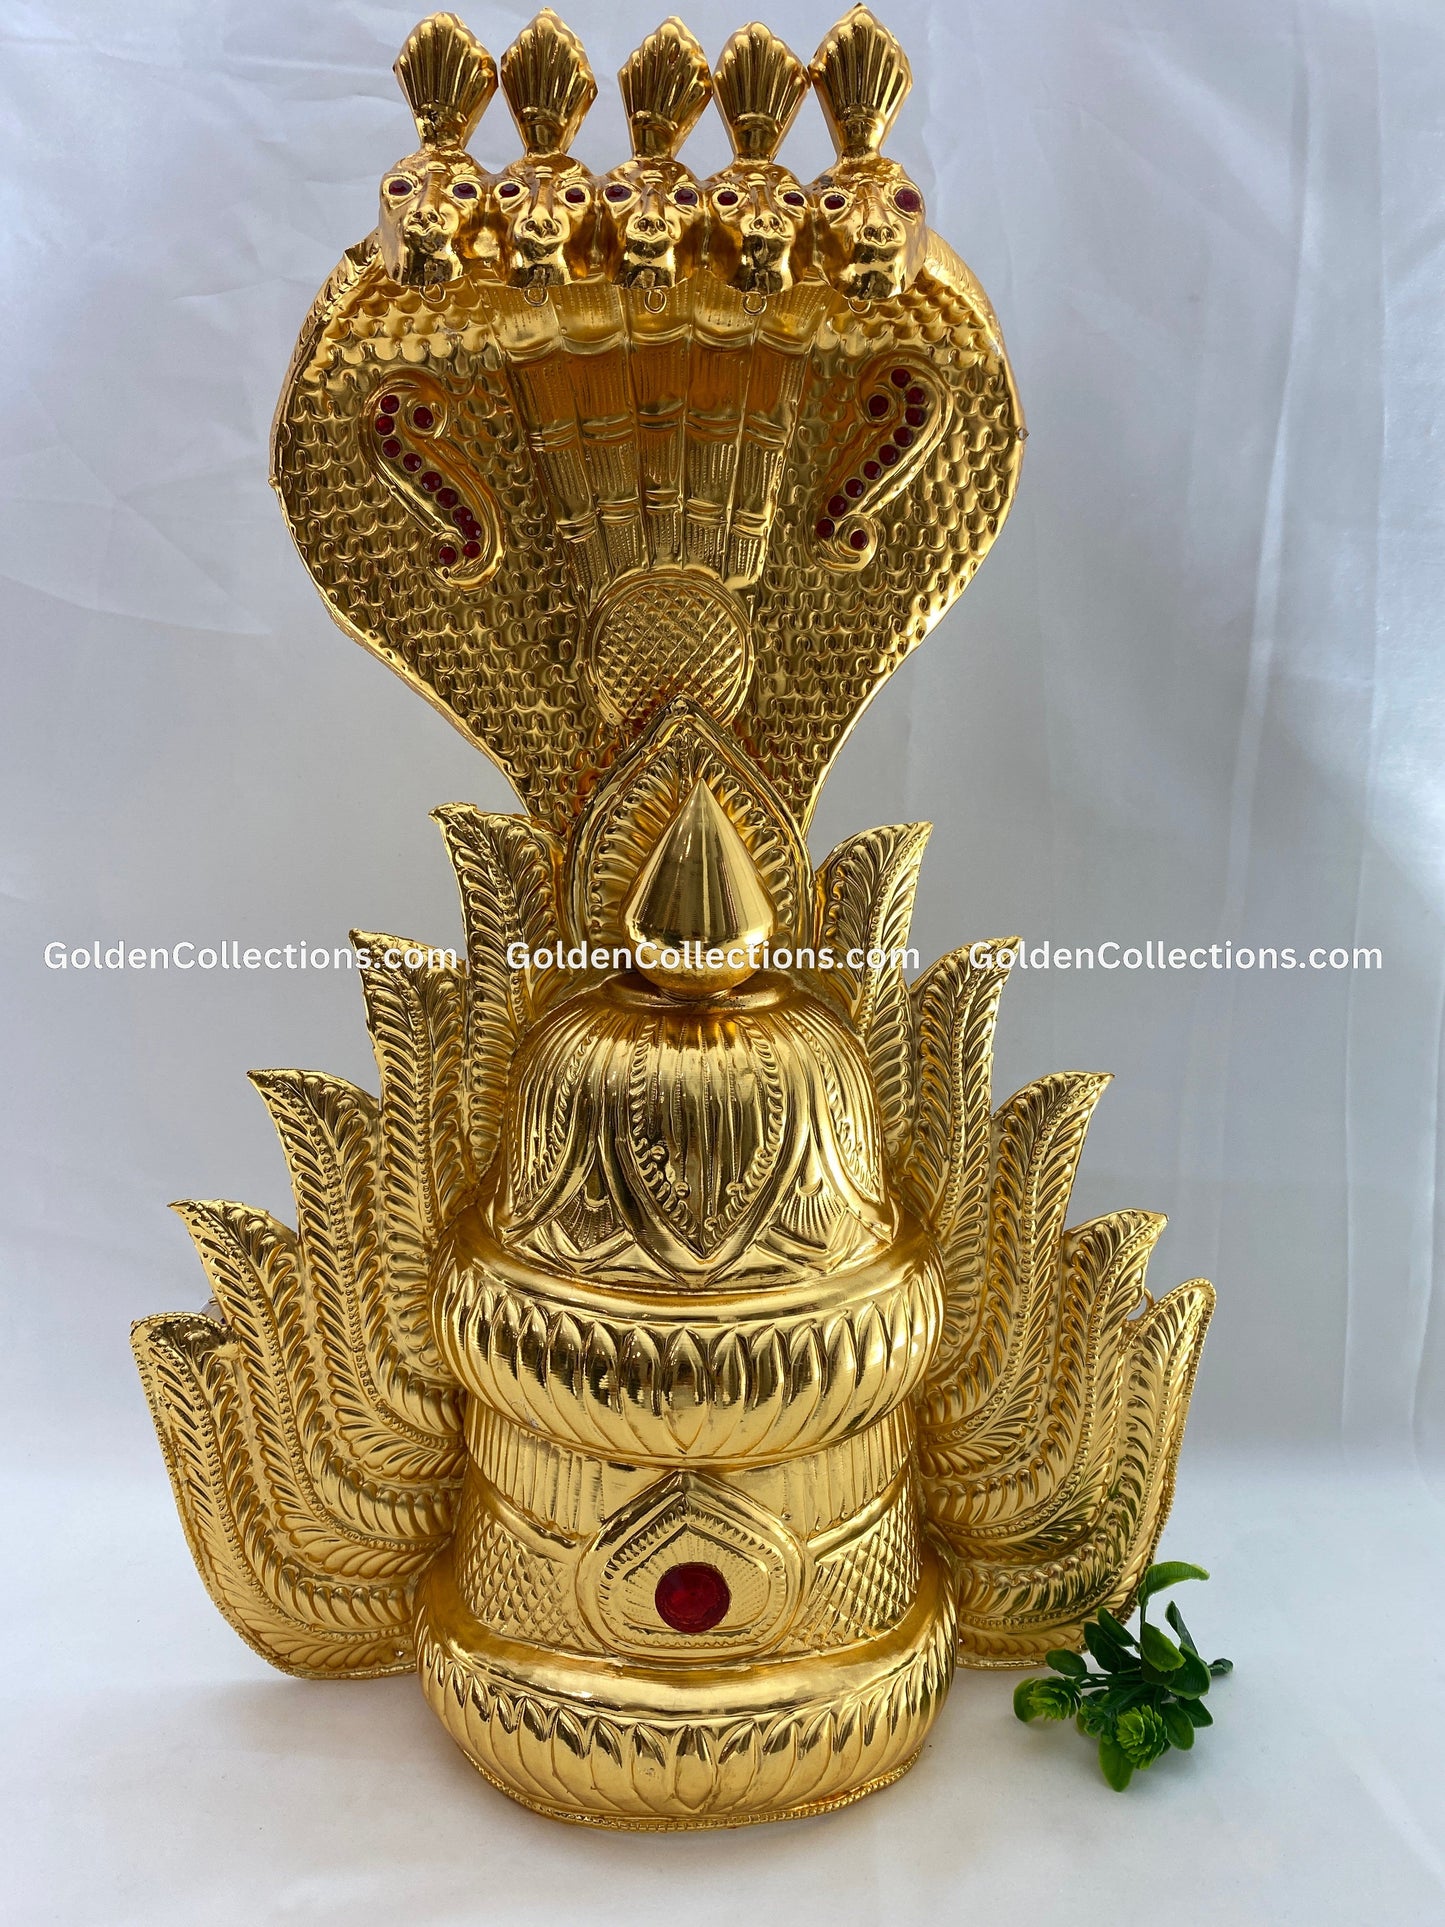 Deity God Goddess Jewellery Crown Mukut - GoldenCollections DGC-030